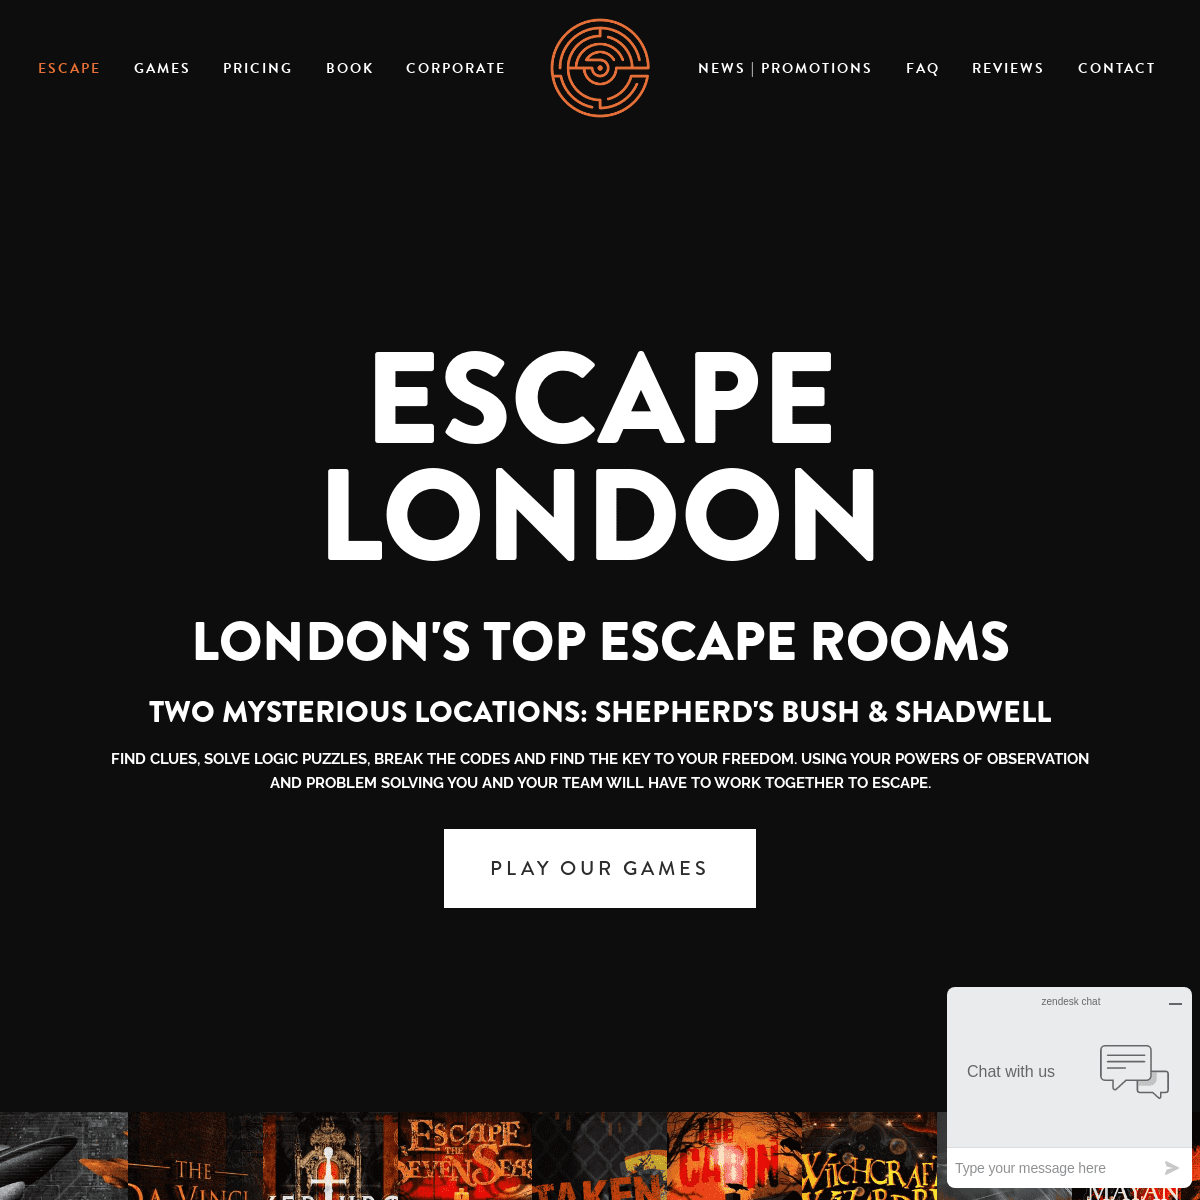 A complete backup of escape-london.co.uk